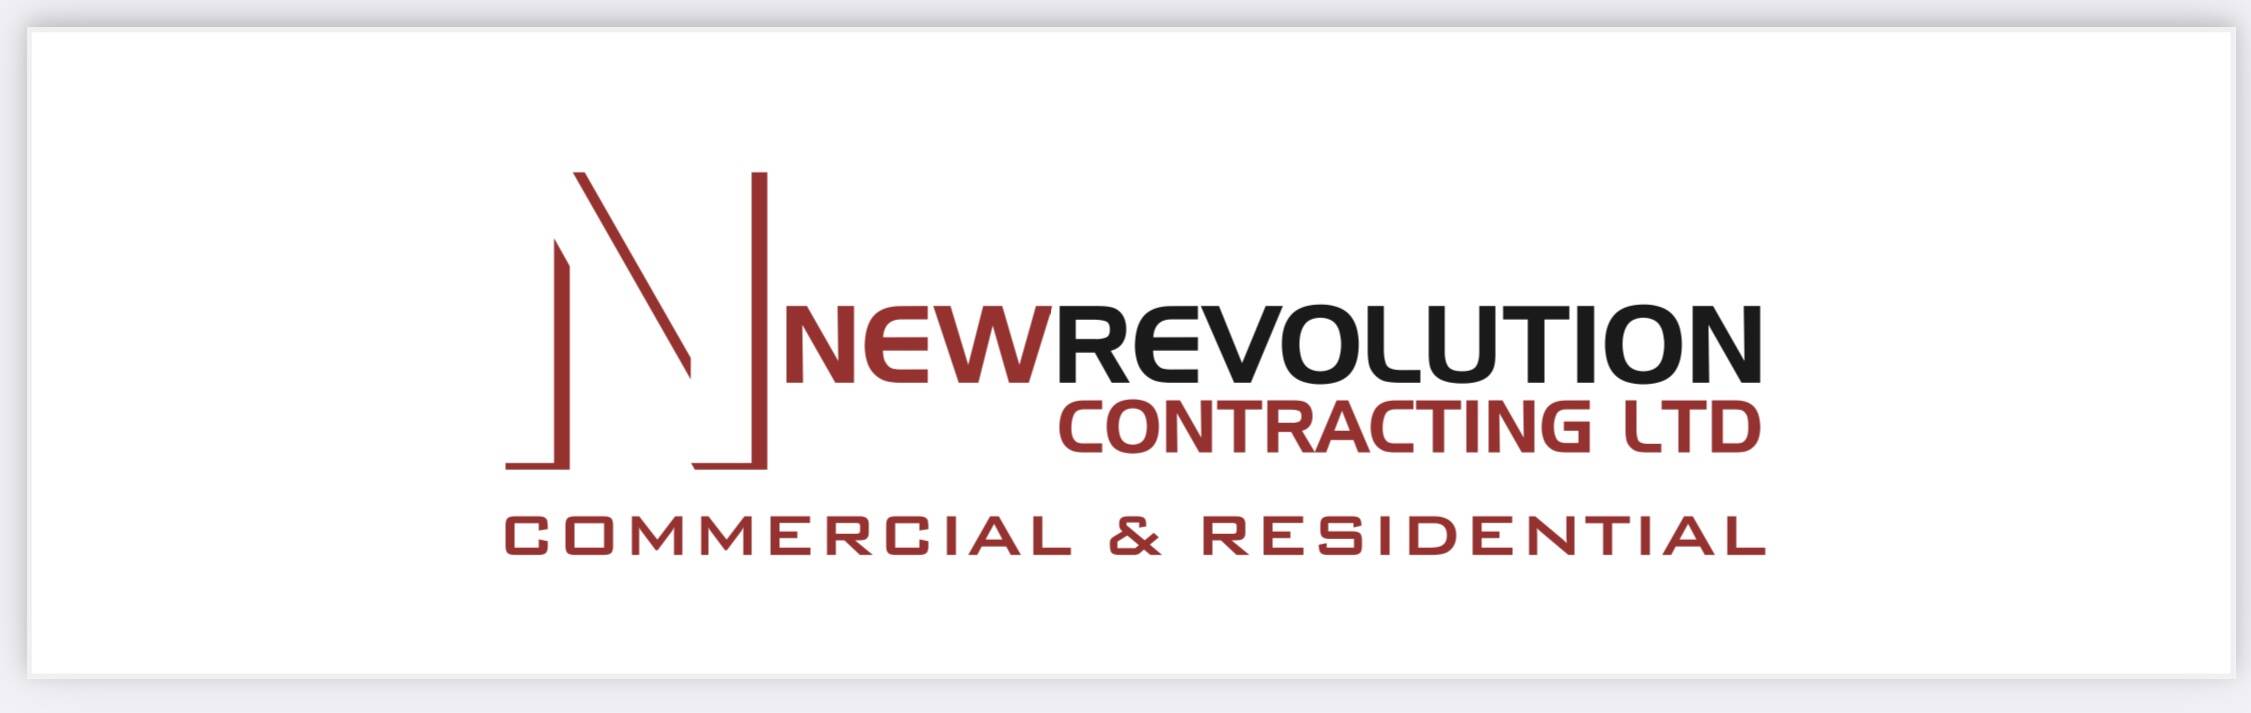 New Revolution Contracting Ltd